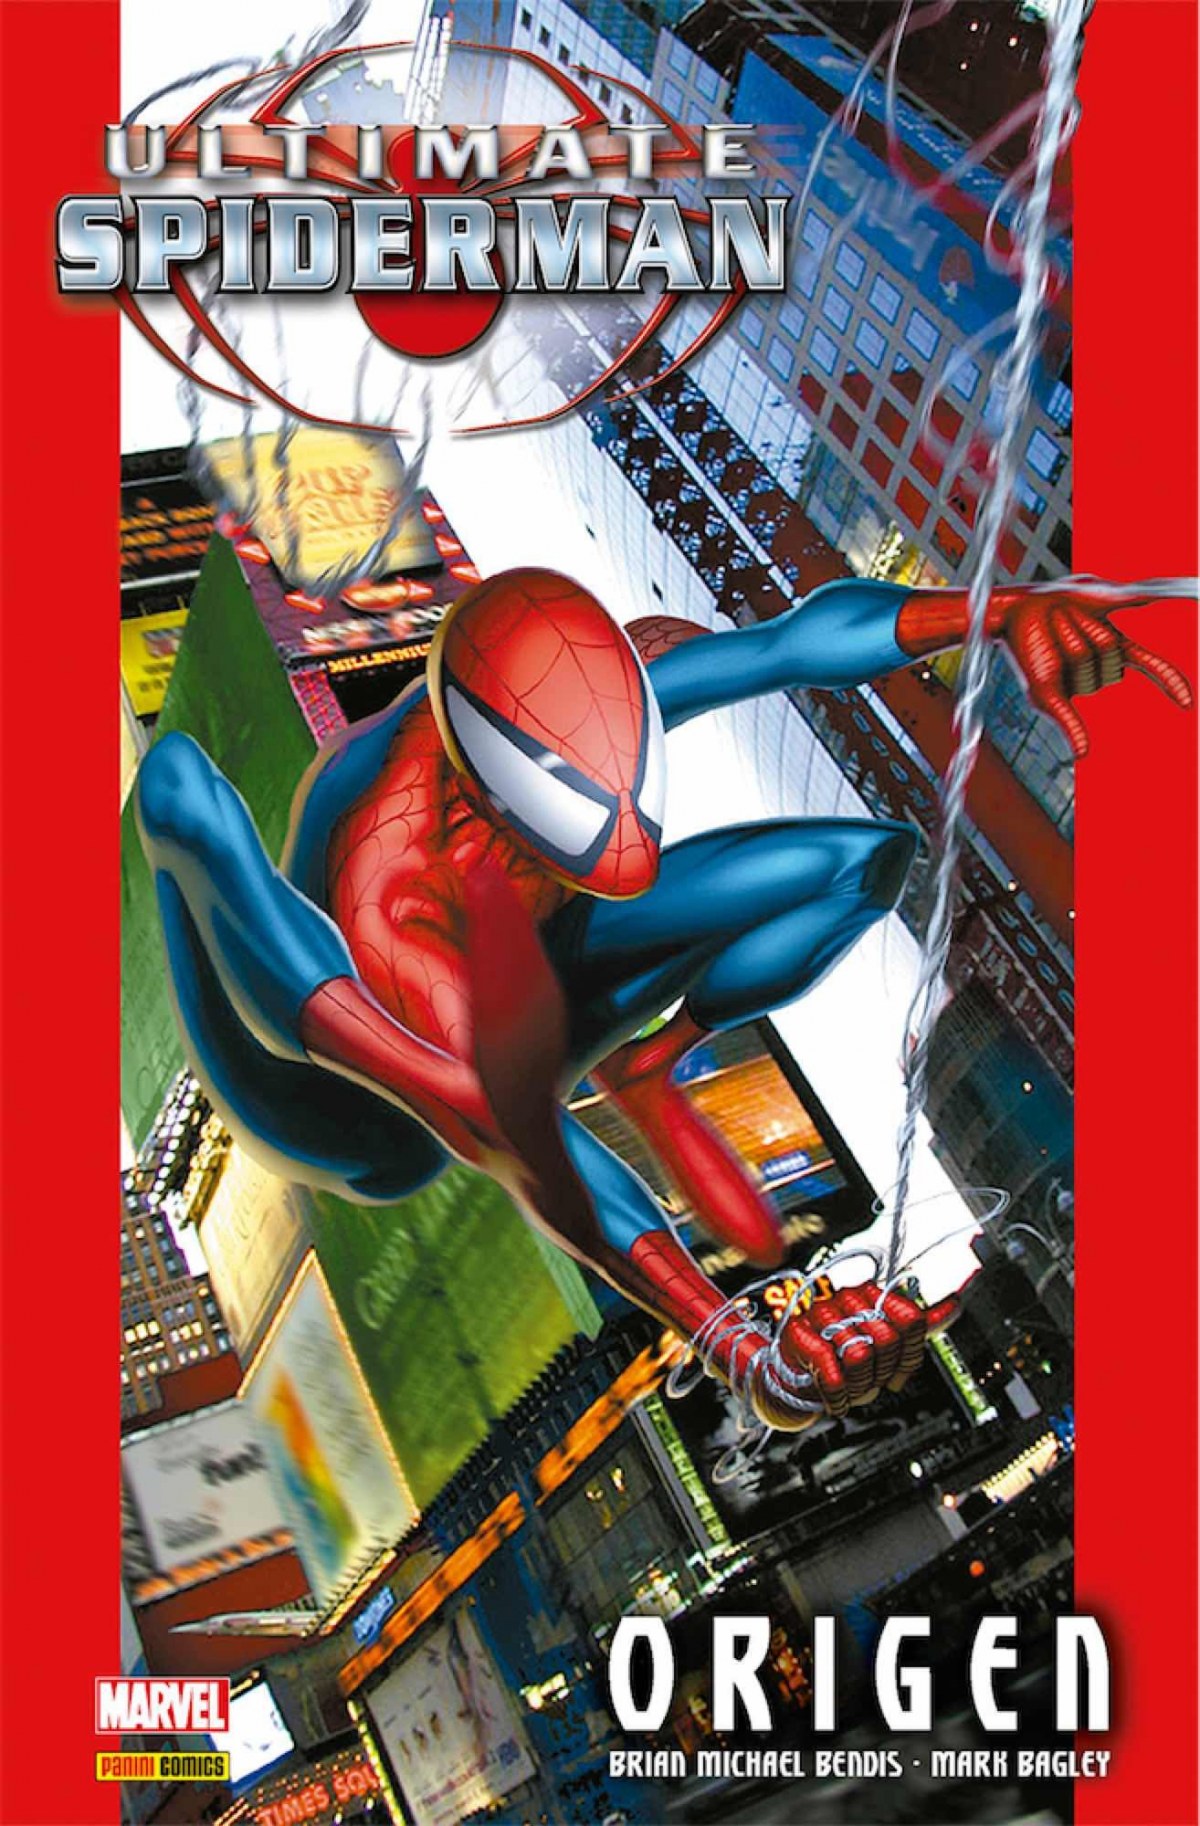 ORIGEN Ultimate Spiderman 1 - Vv.Aa.